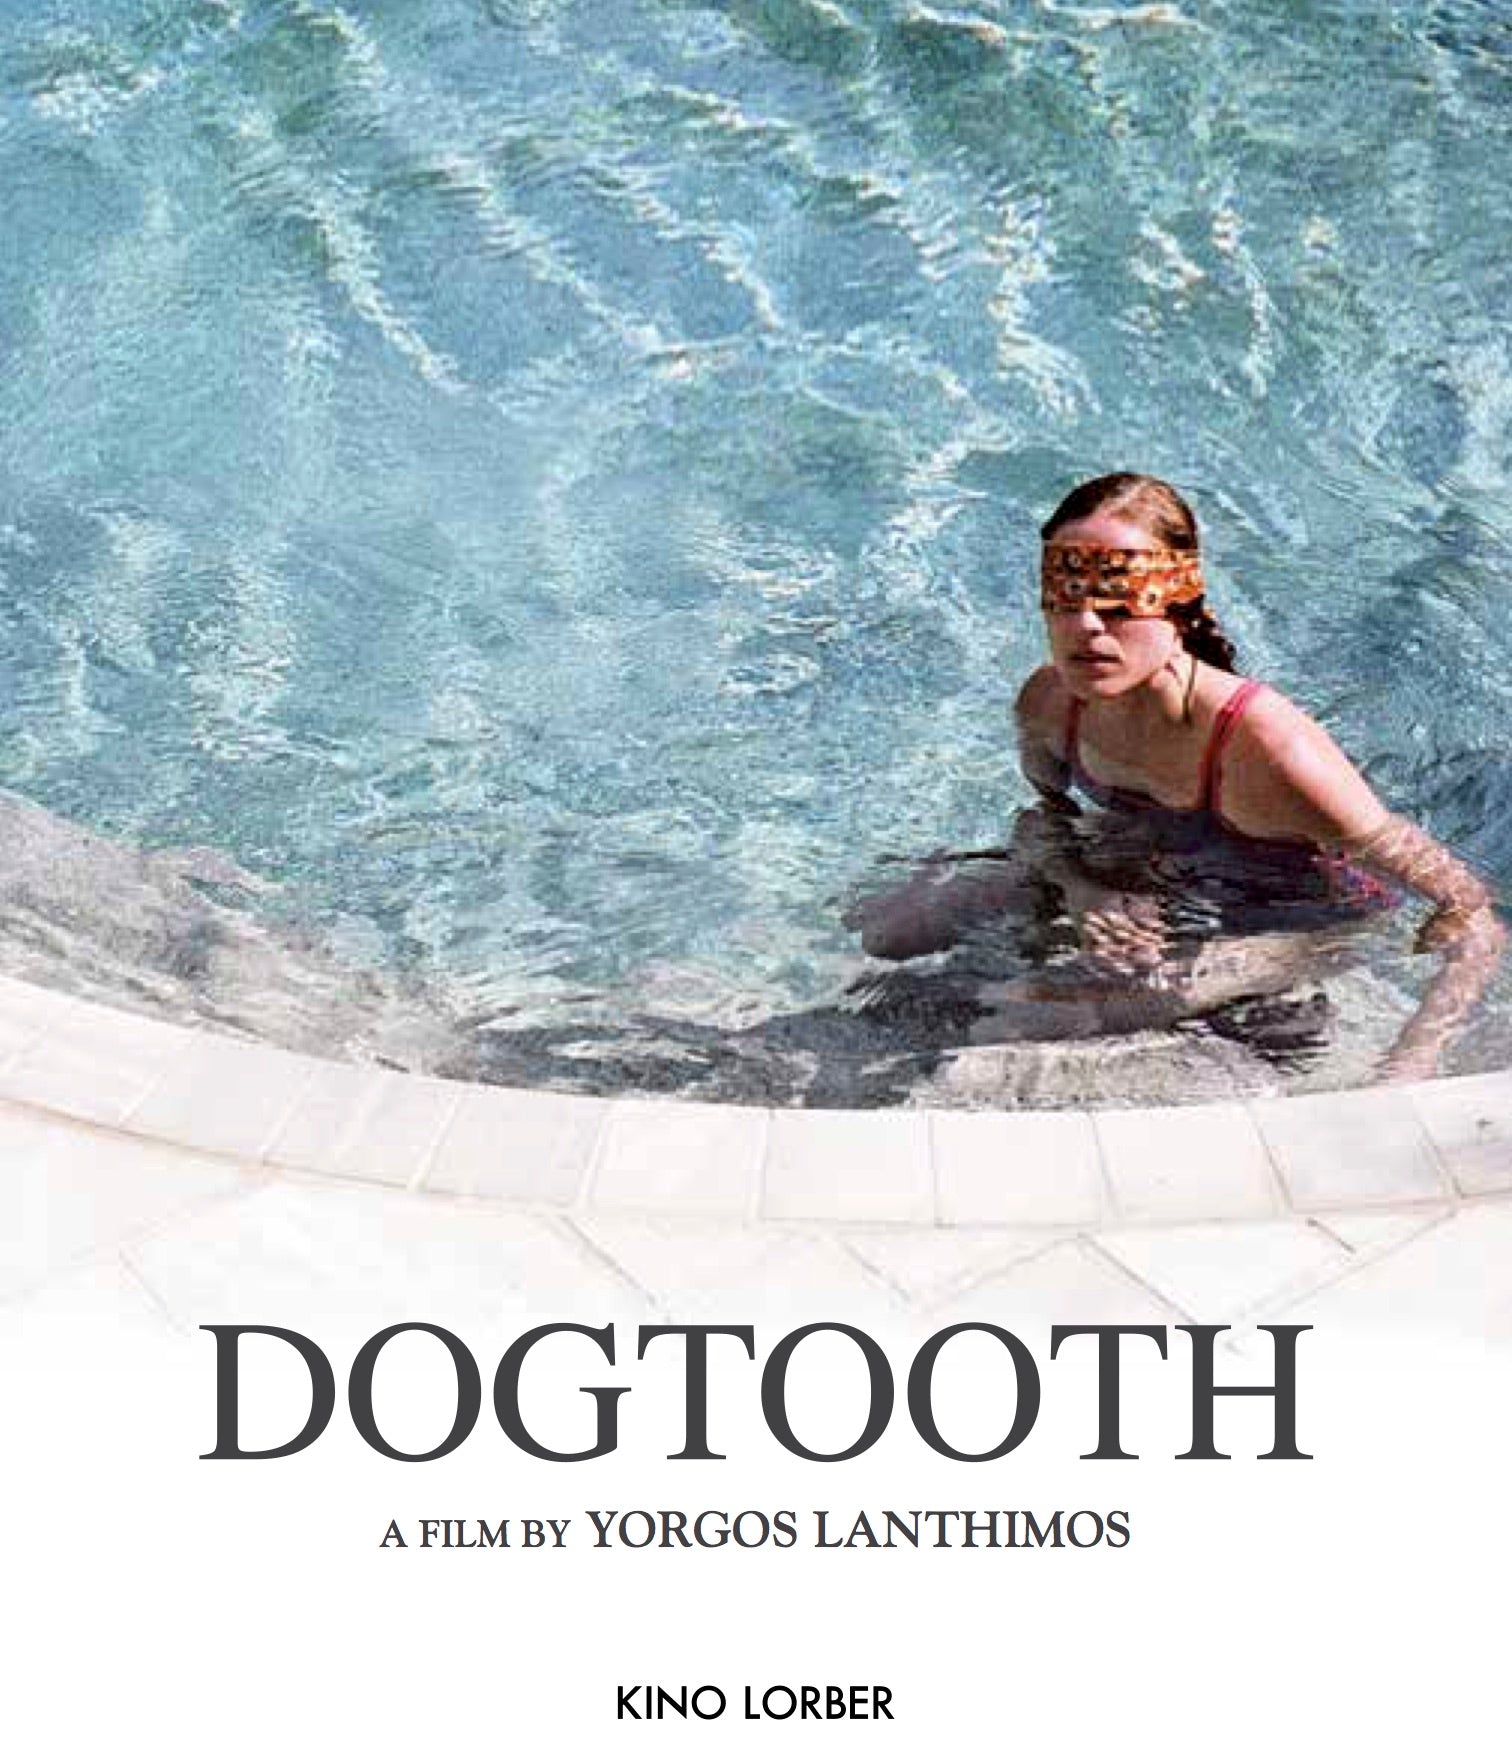 Dogtooth [Blu-ray] cover art